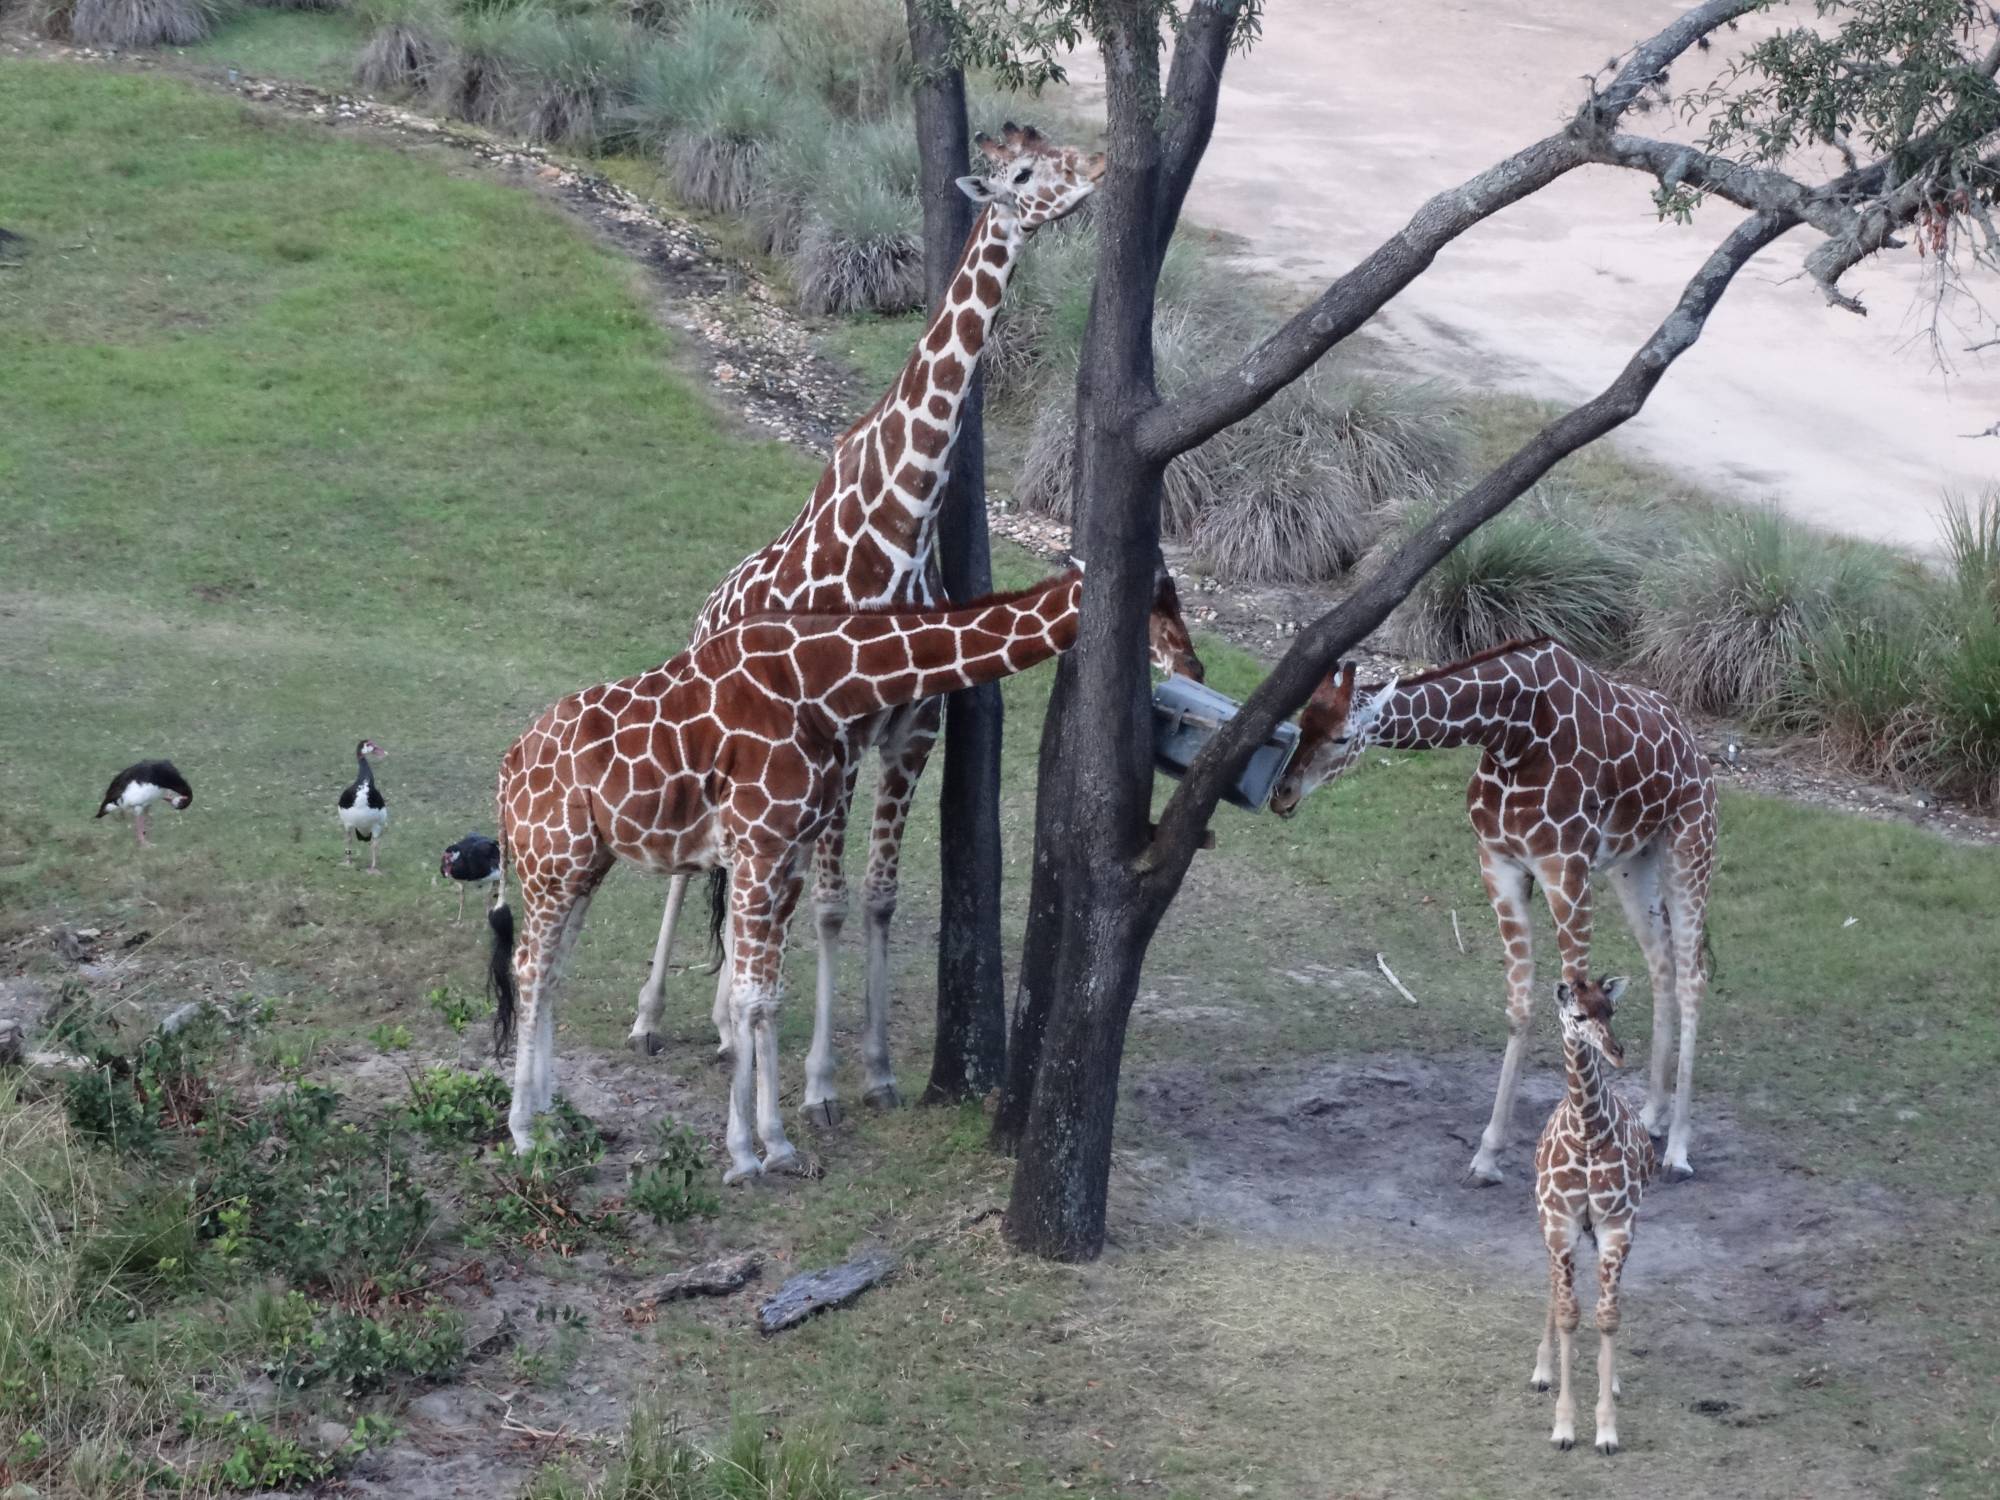 Animal Kingdom Lodge - giraffe feeding time